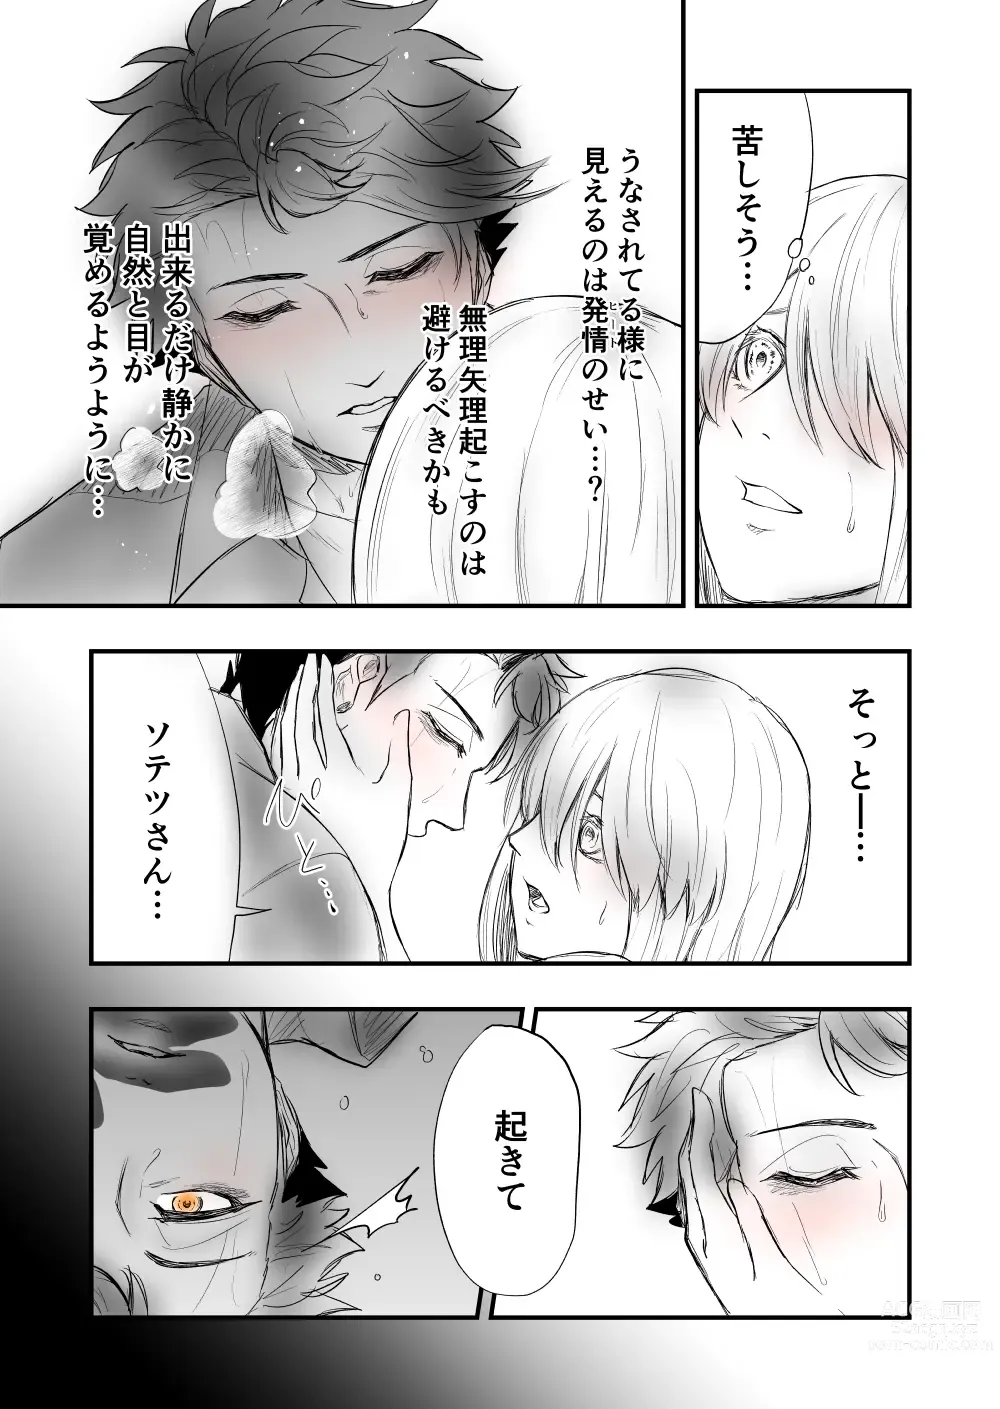 Page 13 of doujinshi 4